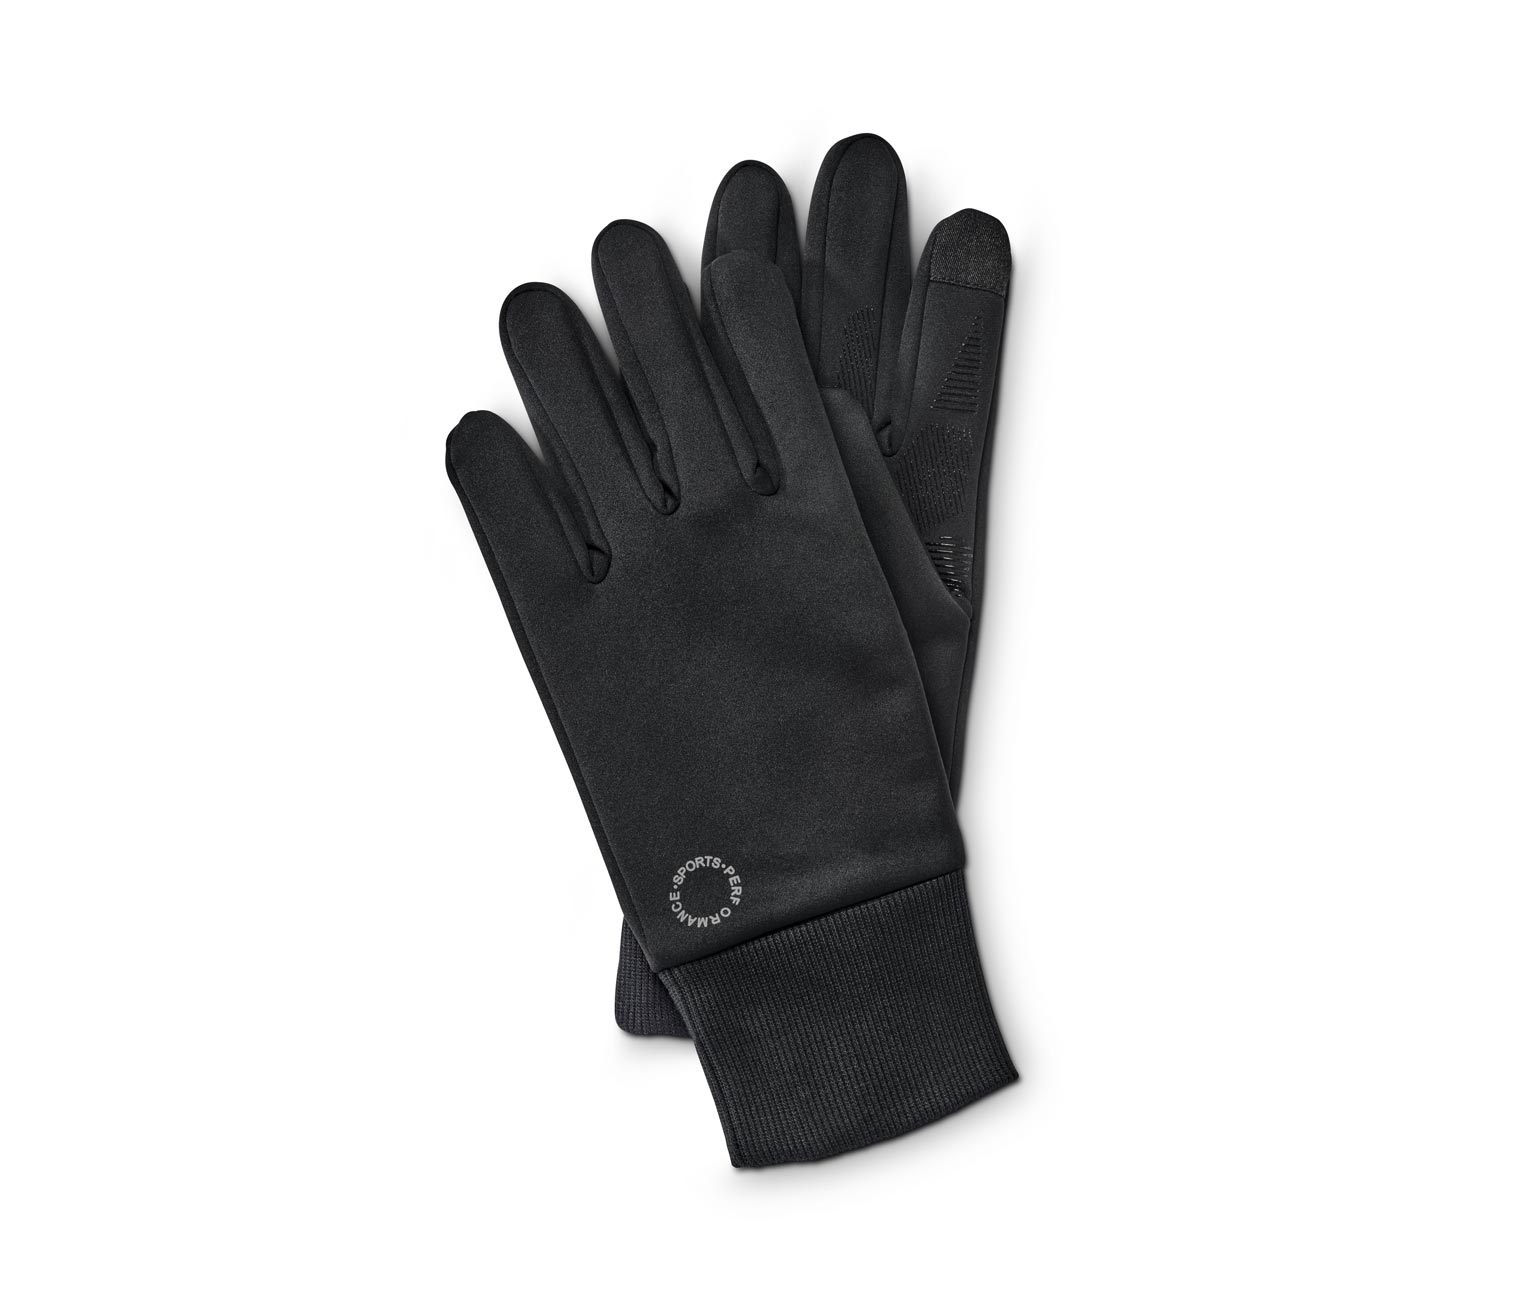 Windprotection-Handschuhe online bestellen bei Tchibo 626711